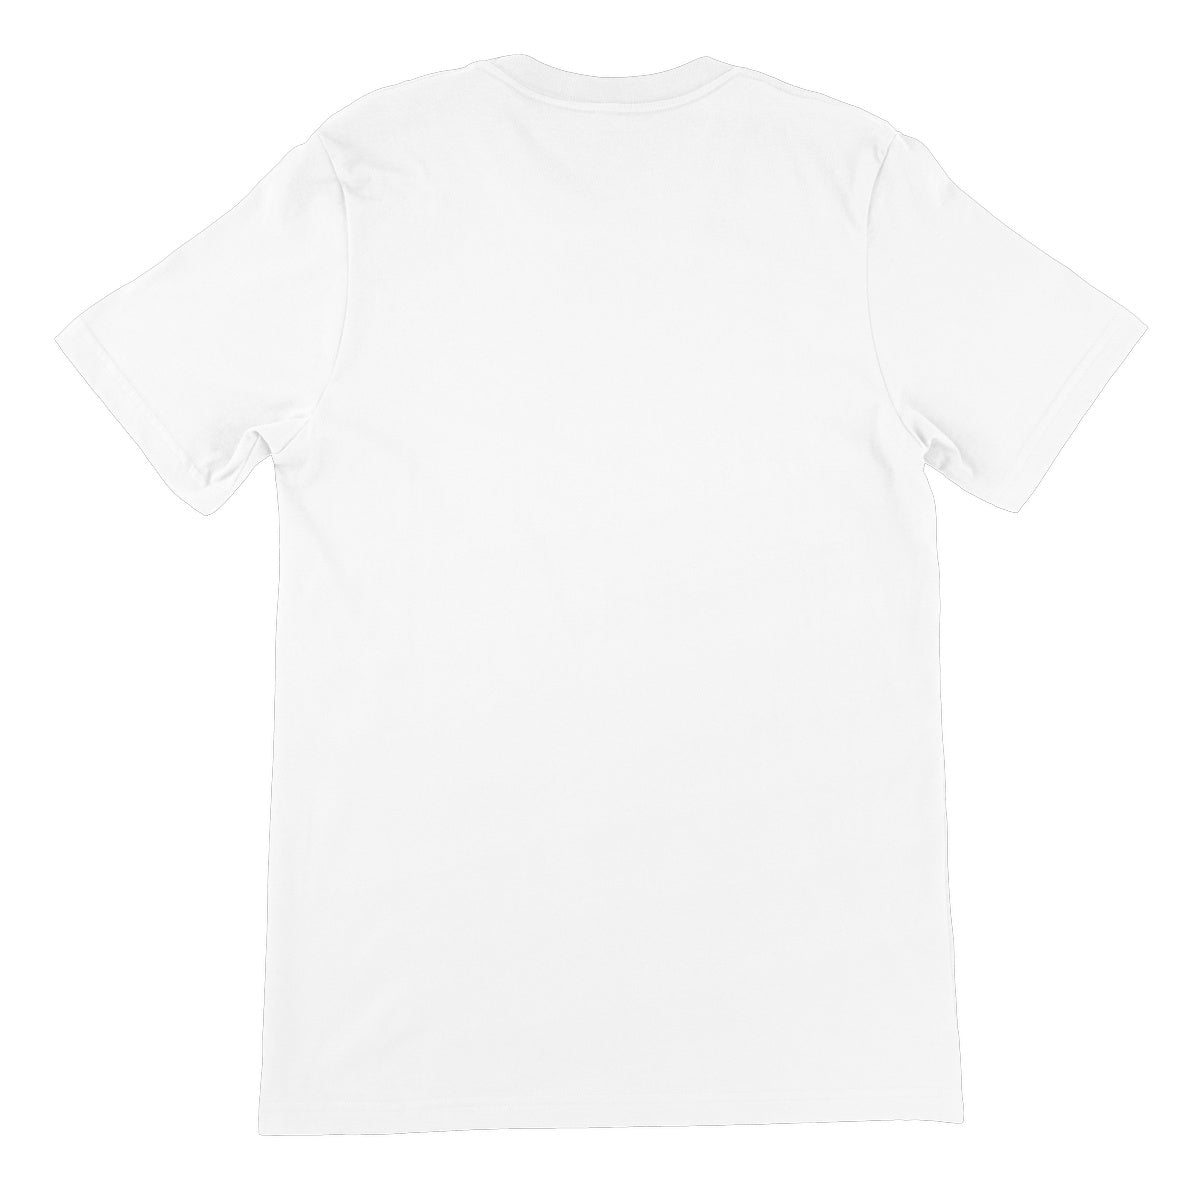 Green Mile Illustrated Unisex Short Sleeve T-Shirt